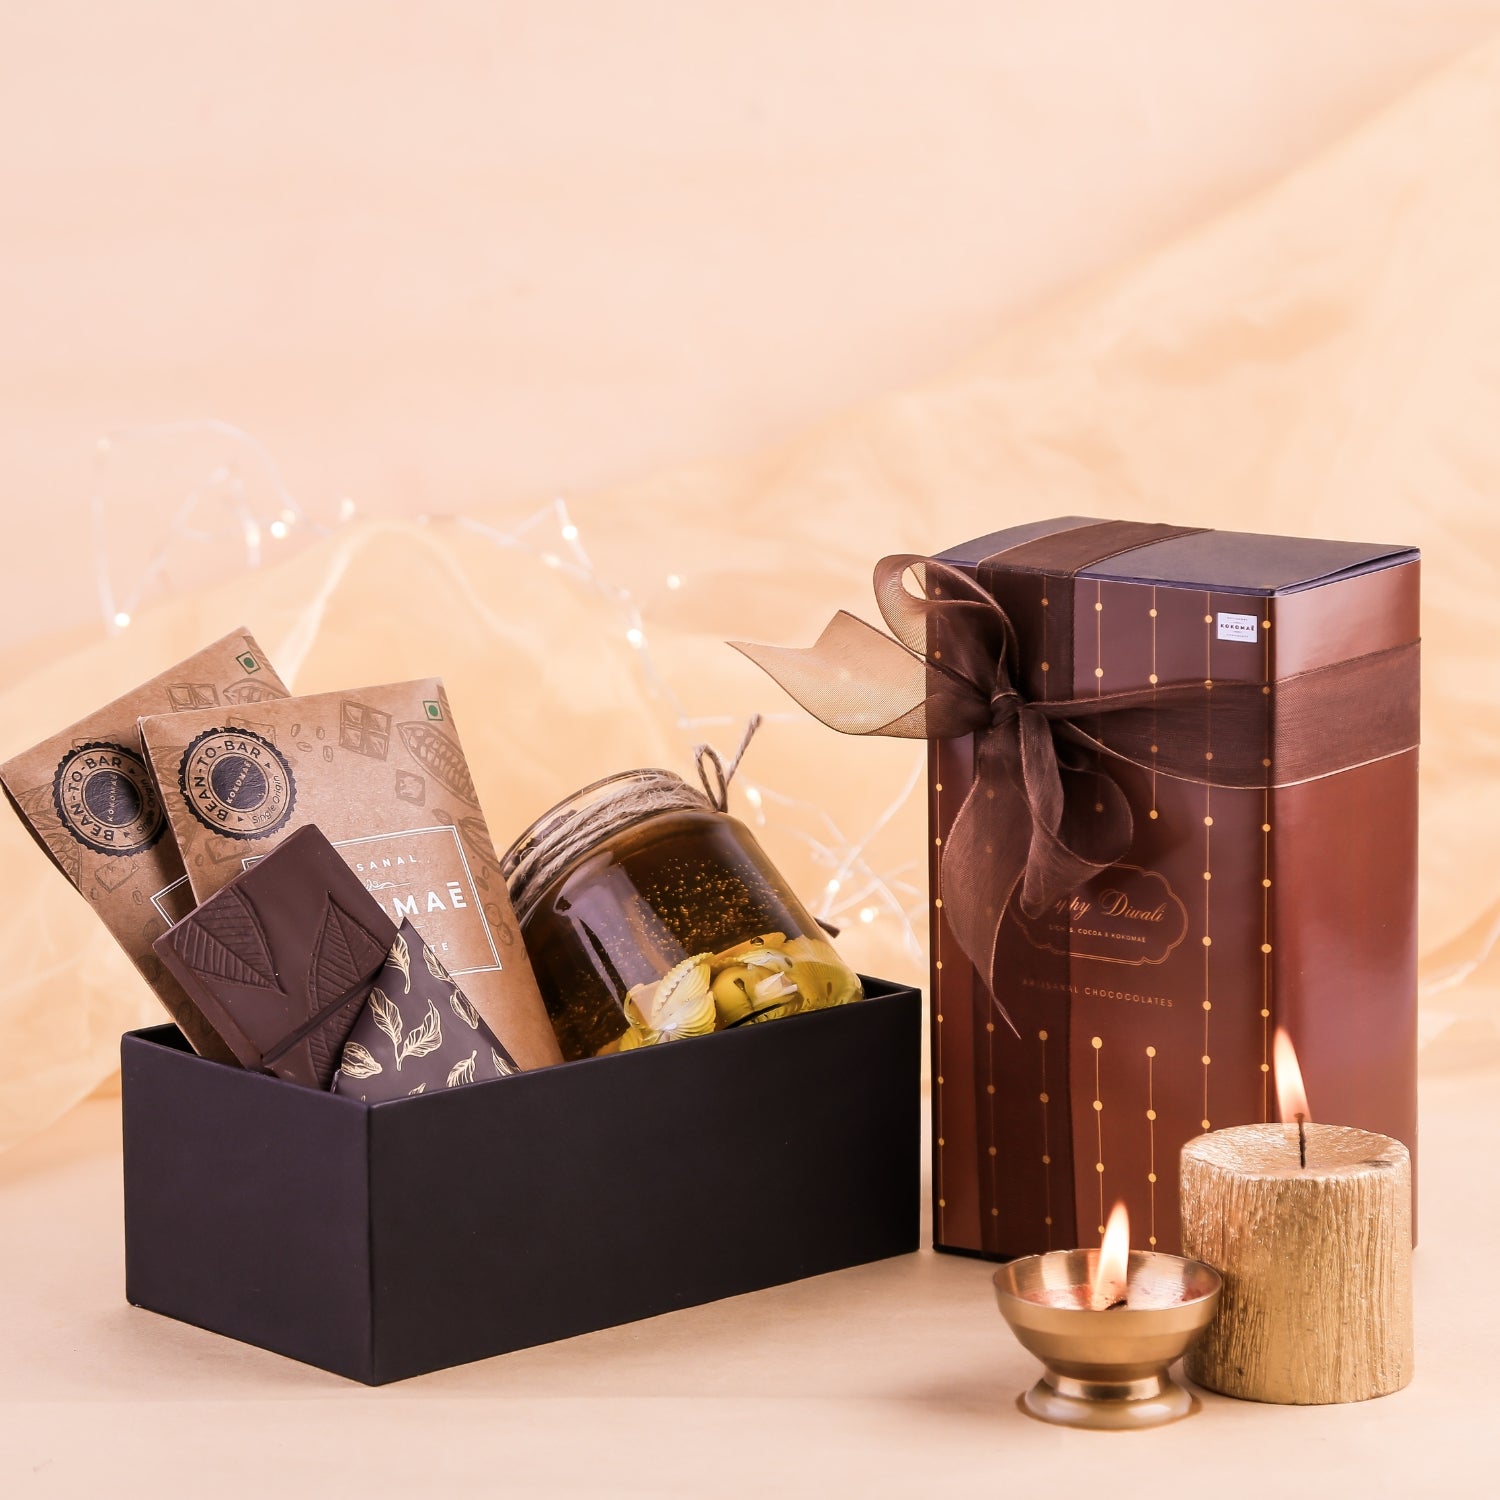 Kokomaē Double Delight Diwali Chocolate Offering : 60% Dark & 70% Dark with a Candle